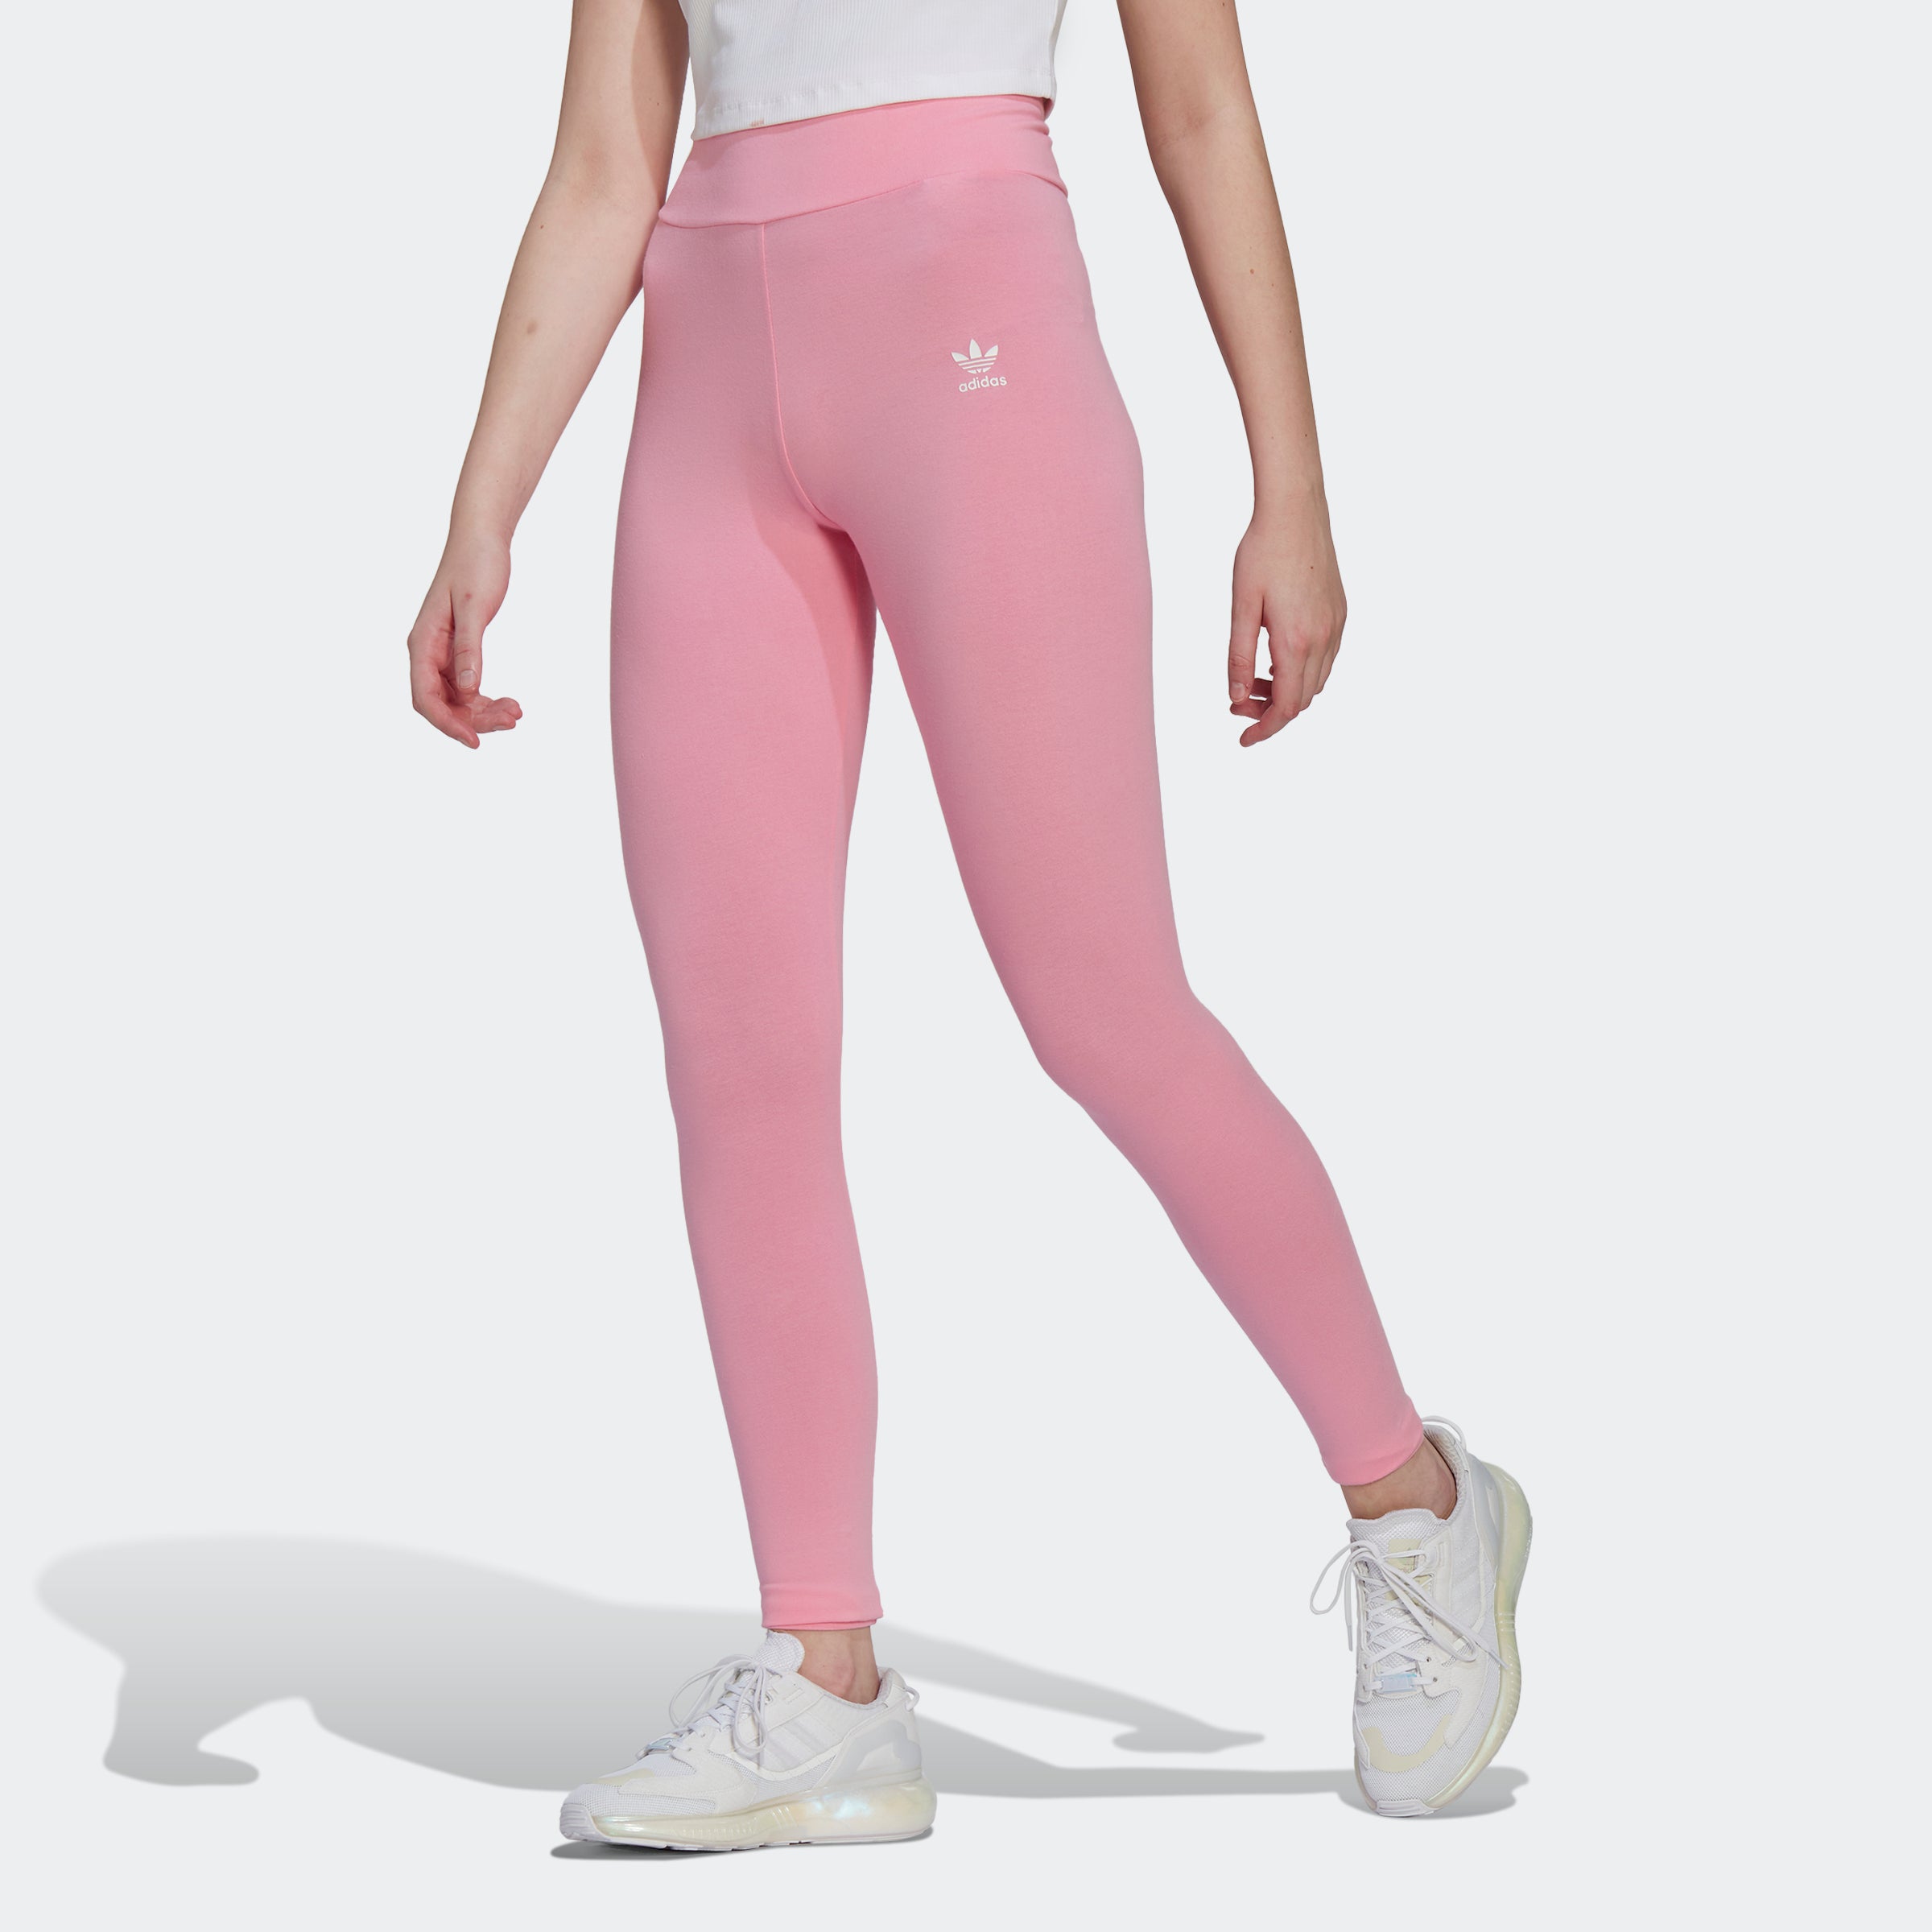 Adidas Climalite Pink Ultimate Fit Printed Leggings Women Small UK